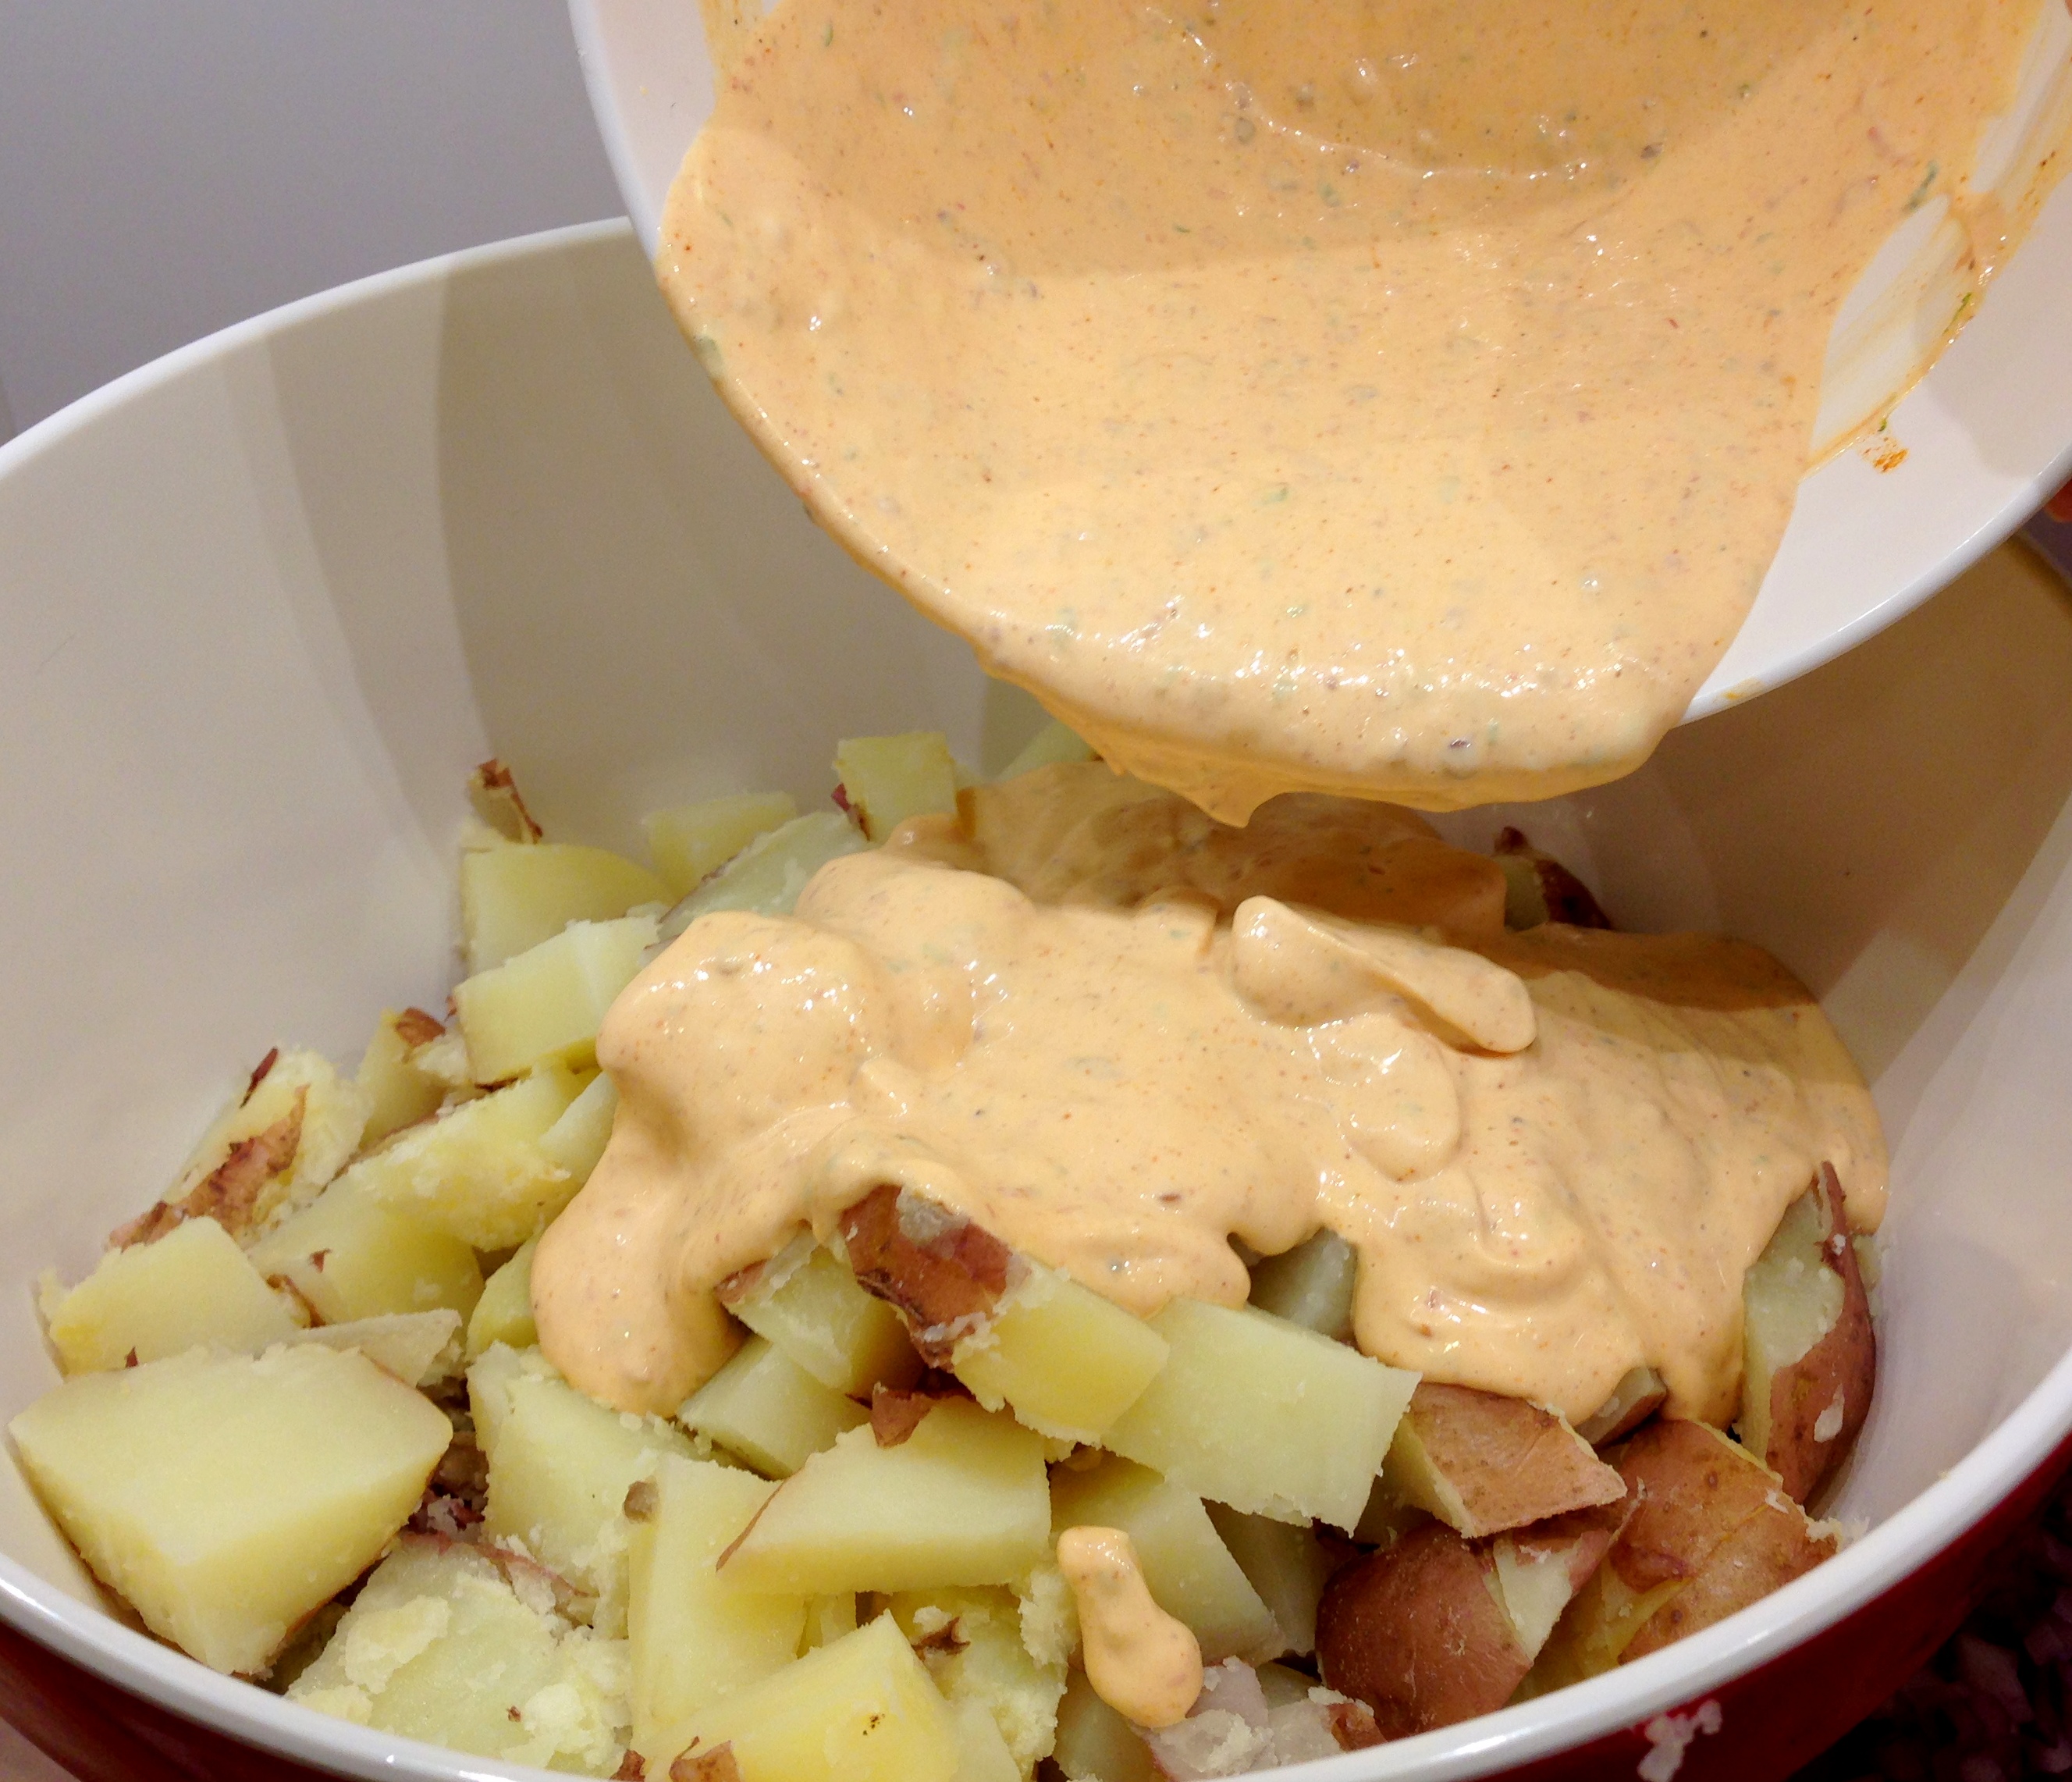 Creamy Chipotle on potatoes